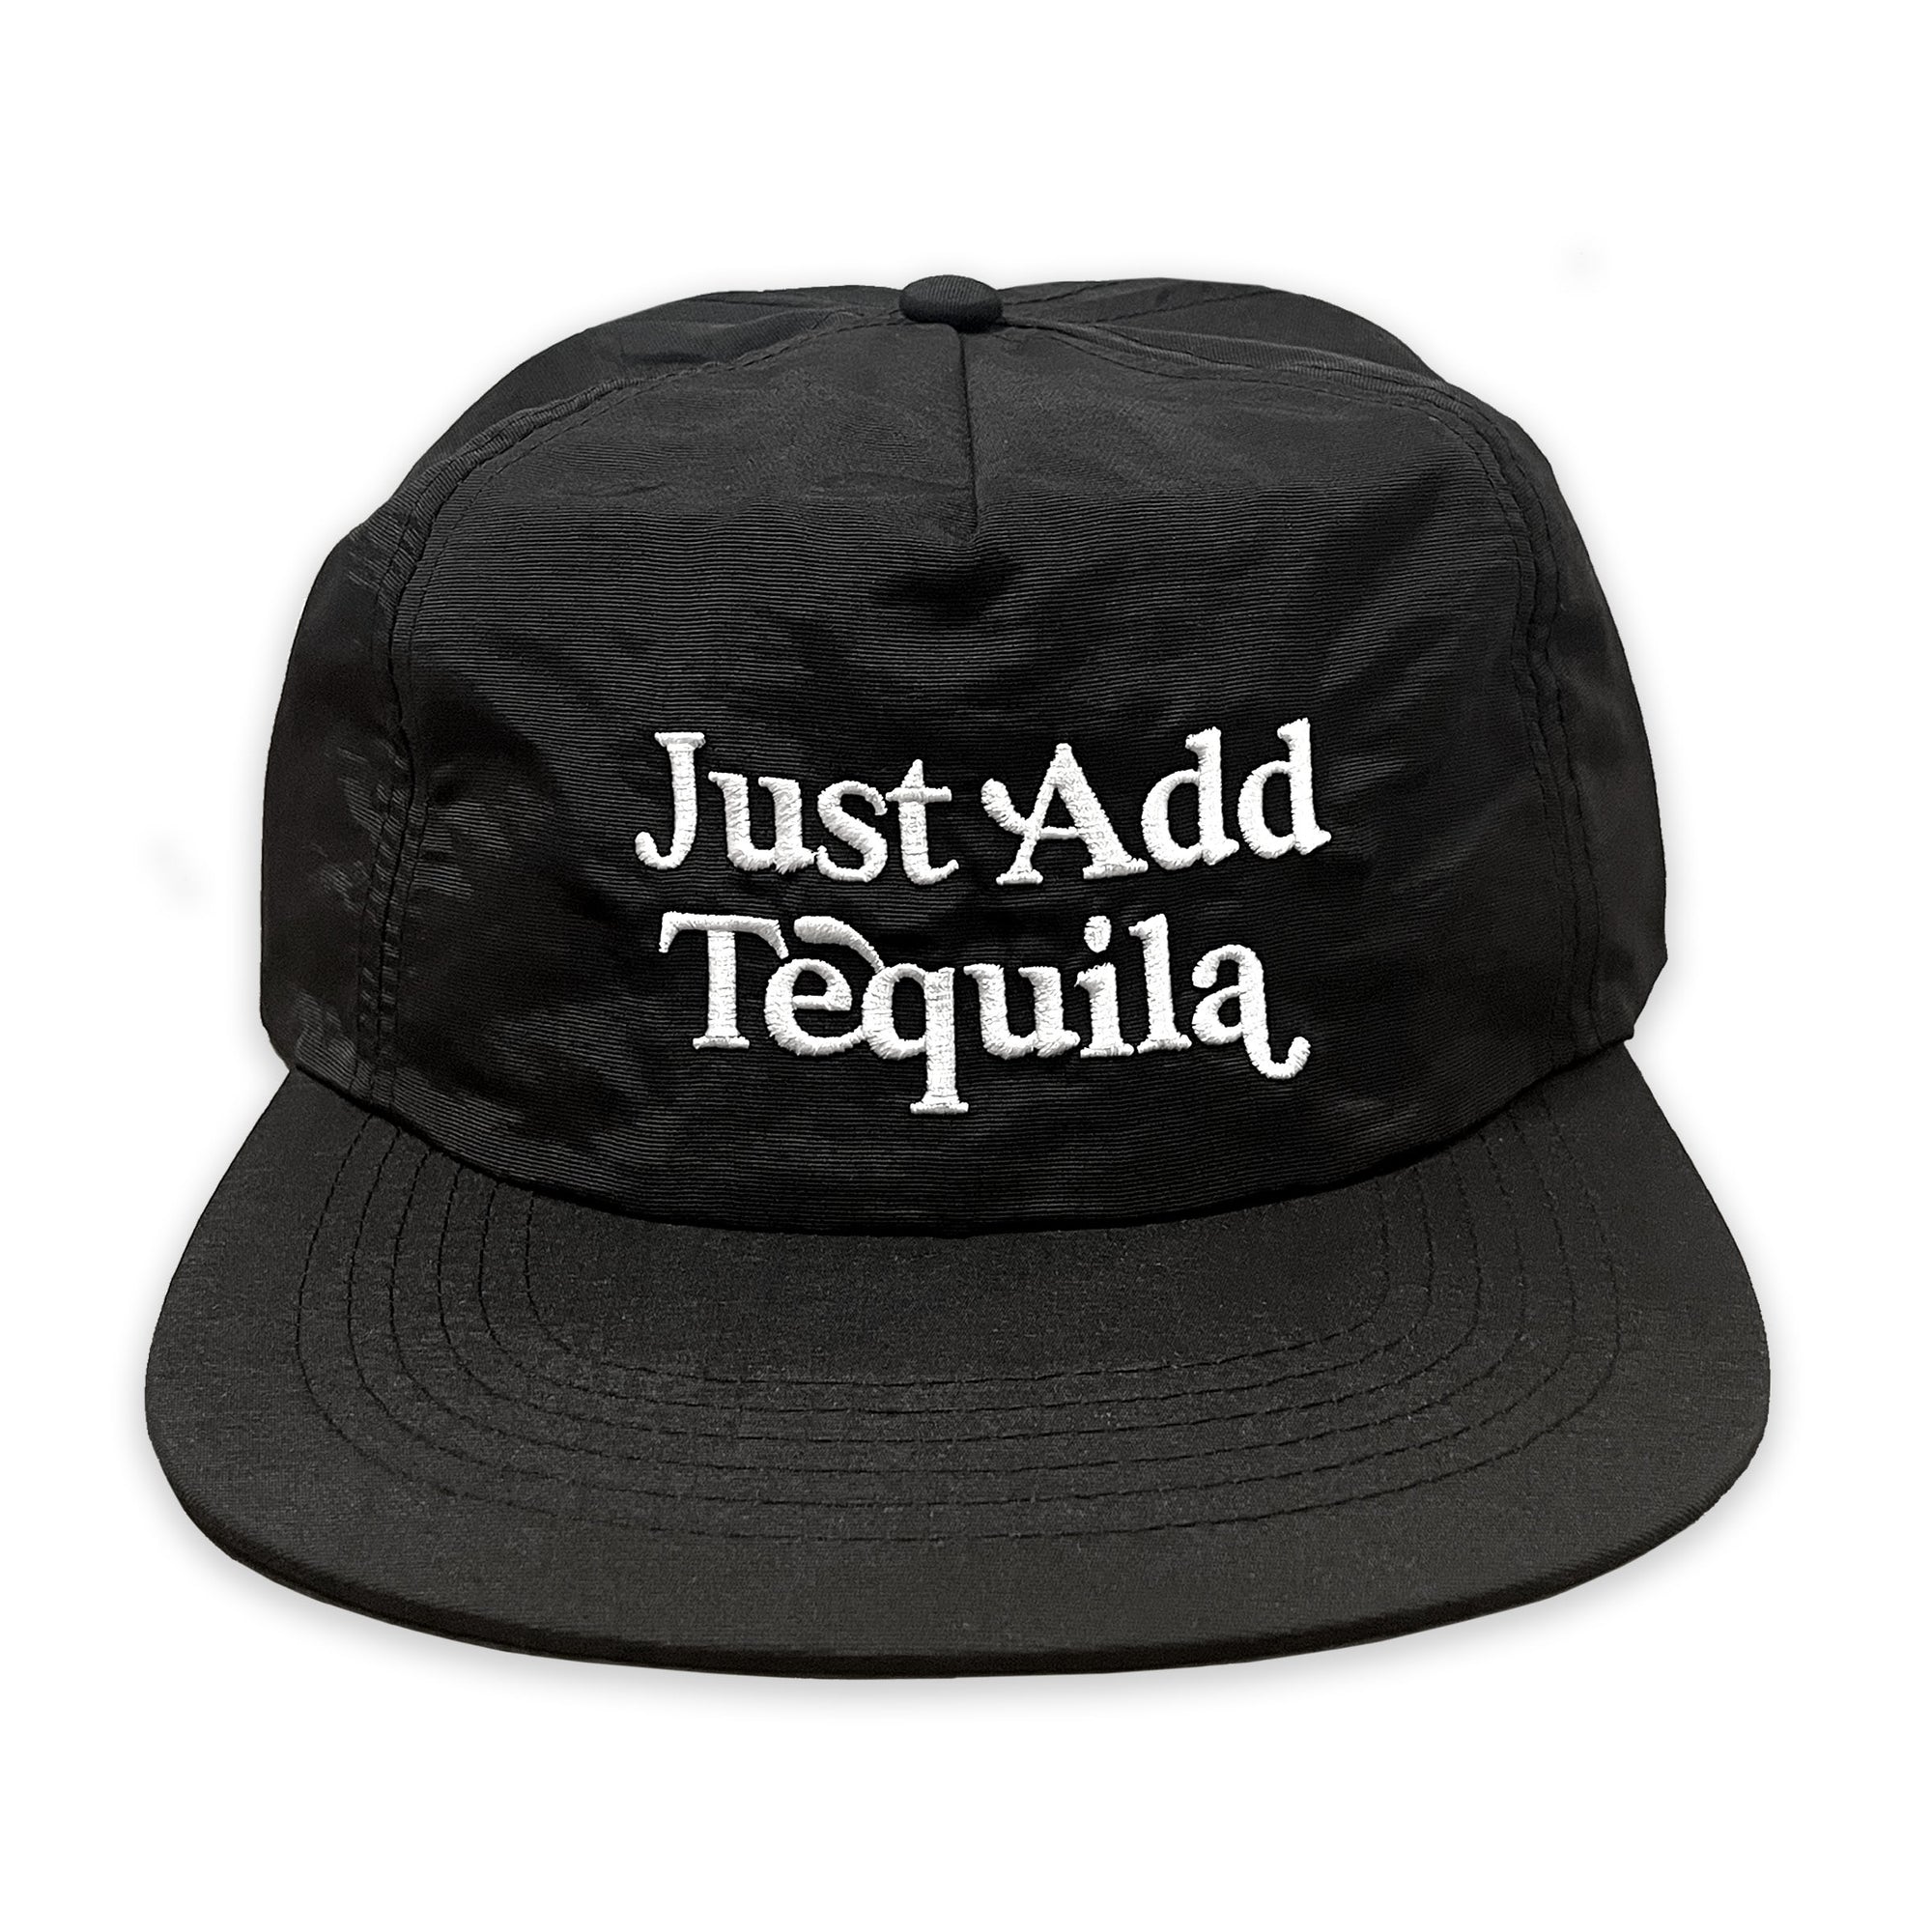 Just Add Tequila Snapback - Black